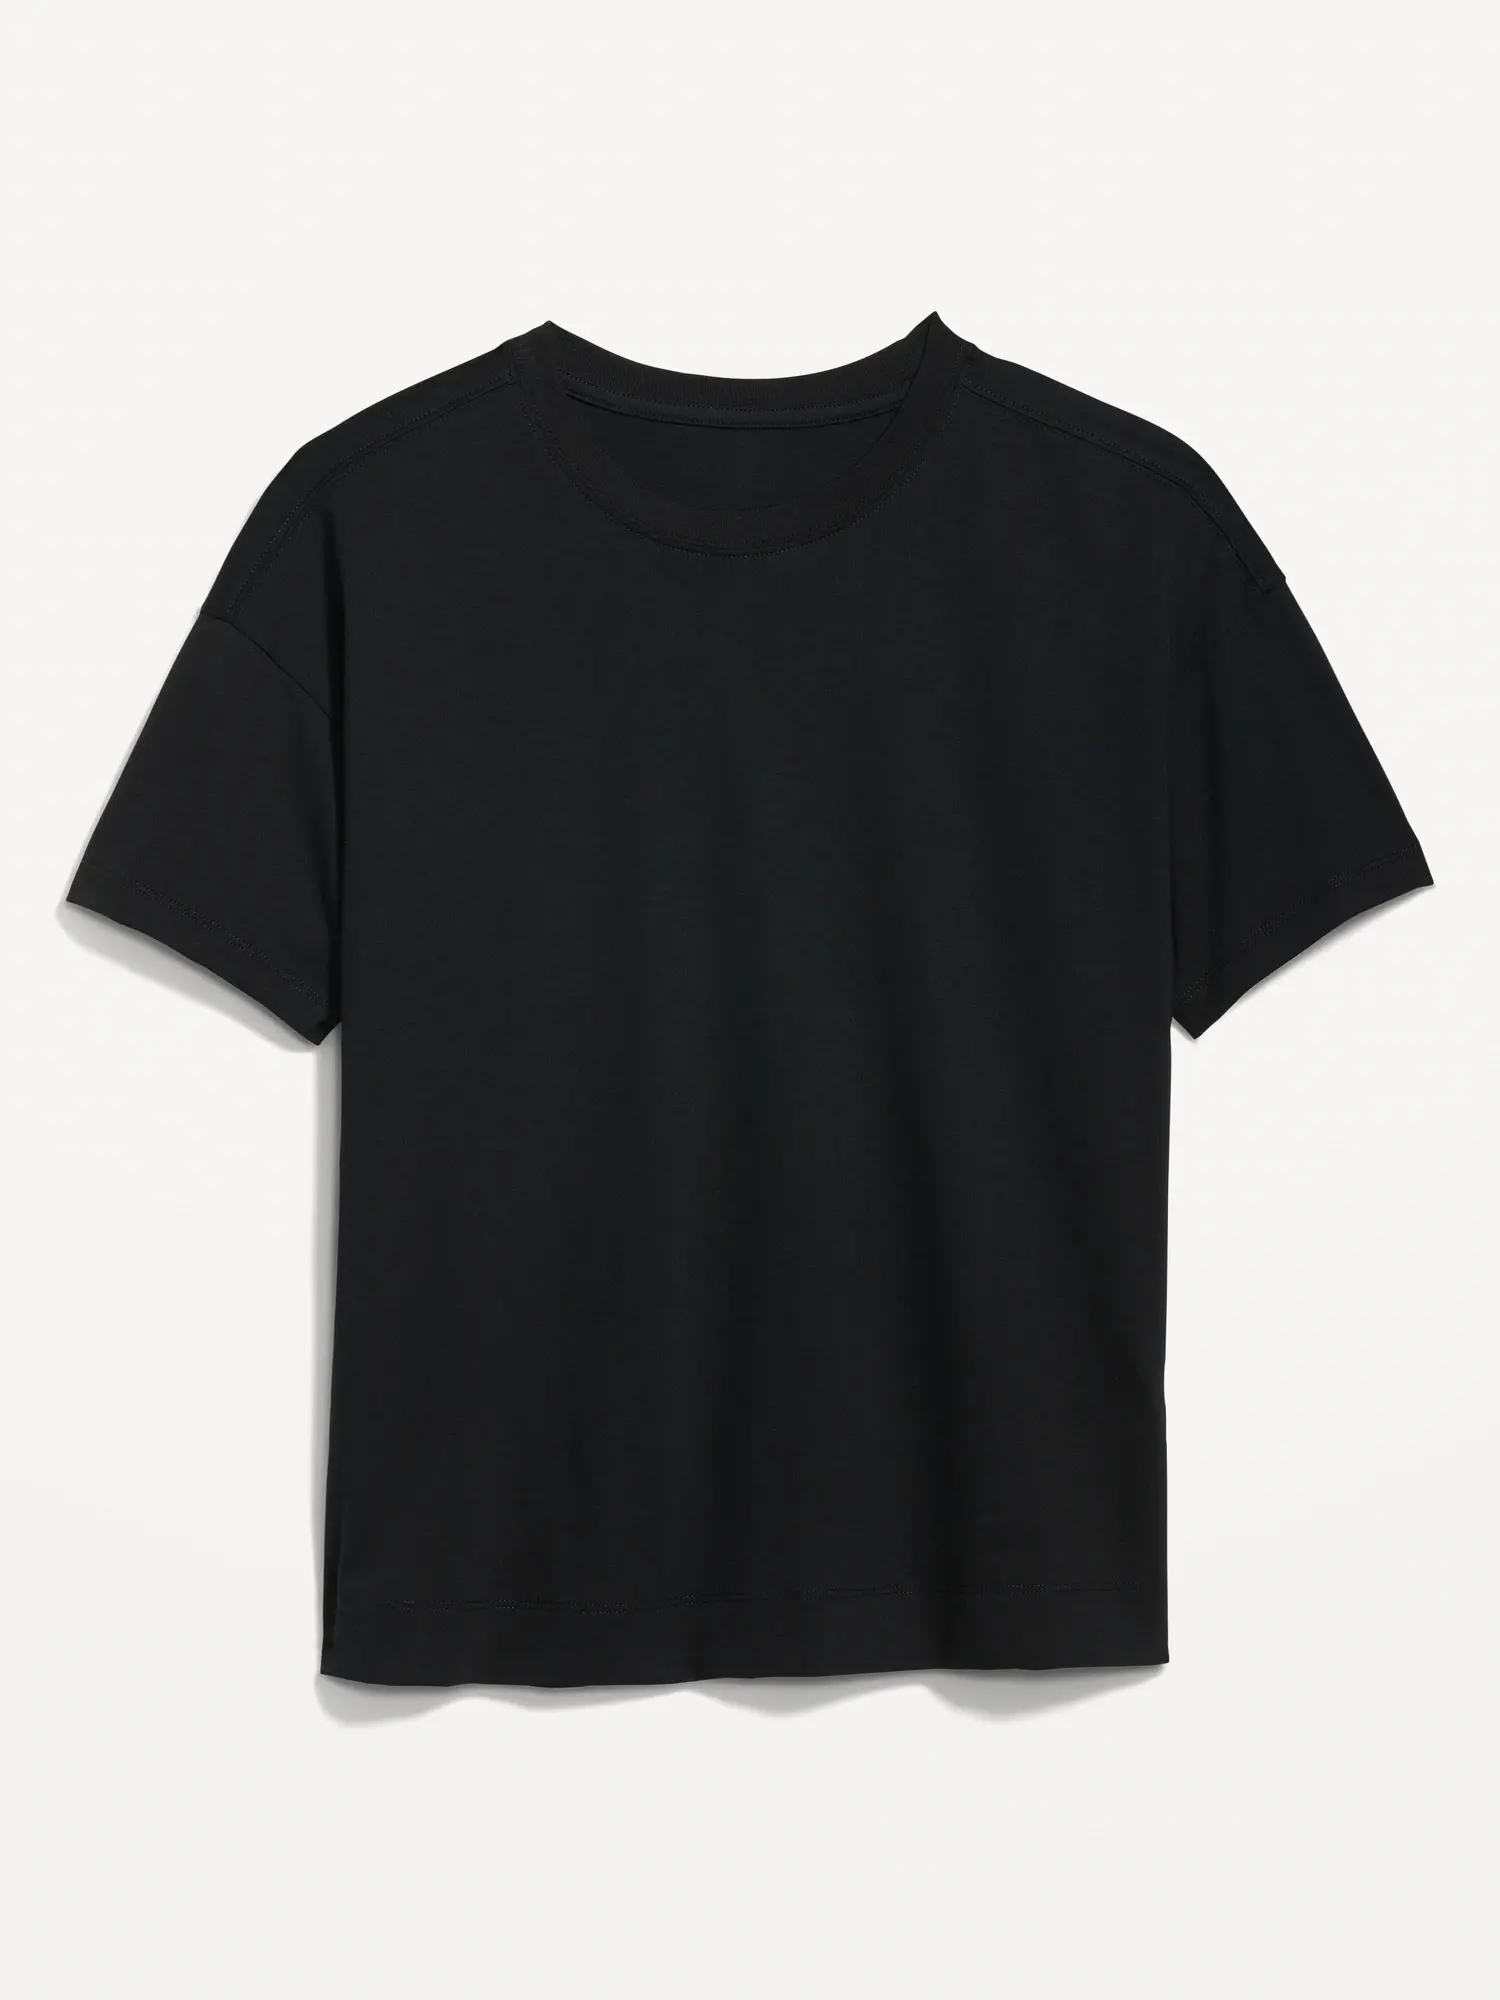 Old Navy Vintage T-Shirt for Women black. 1